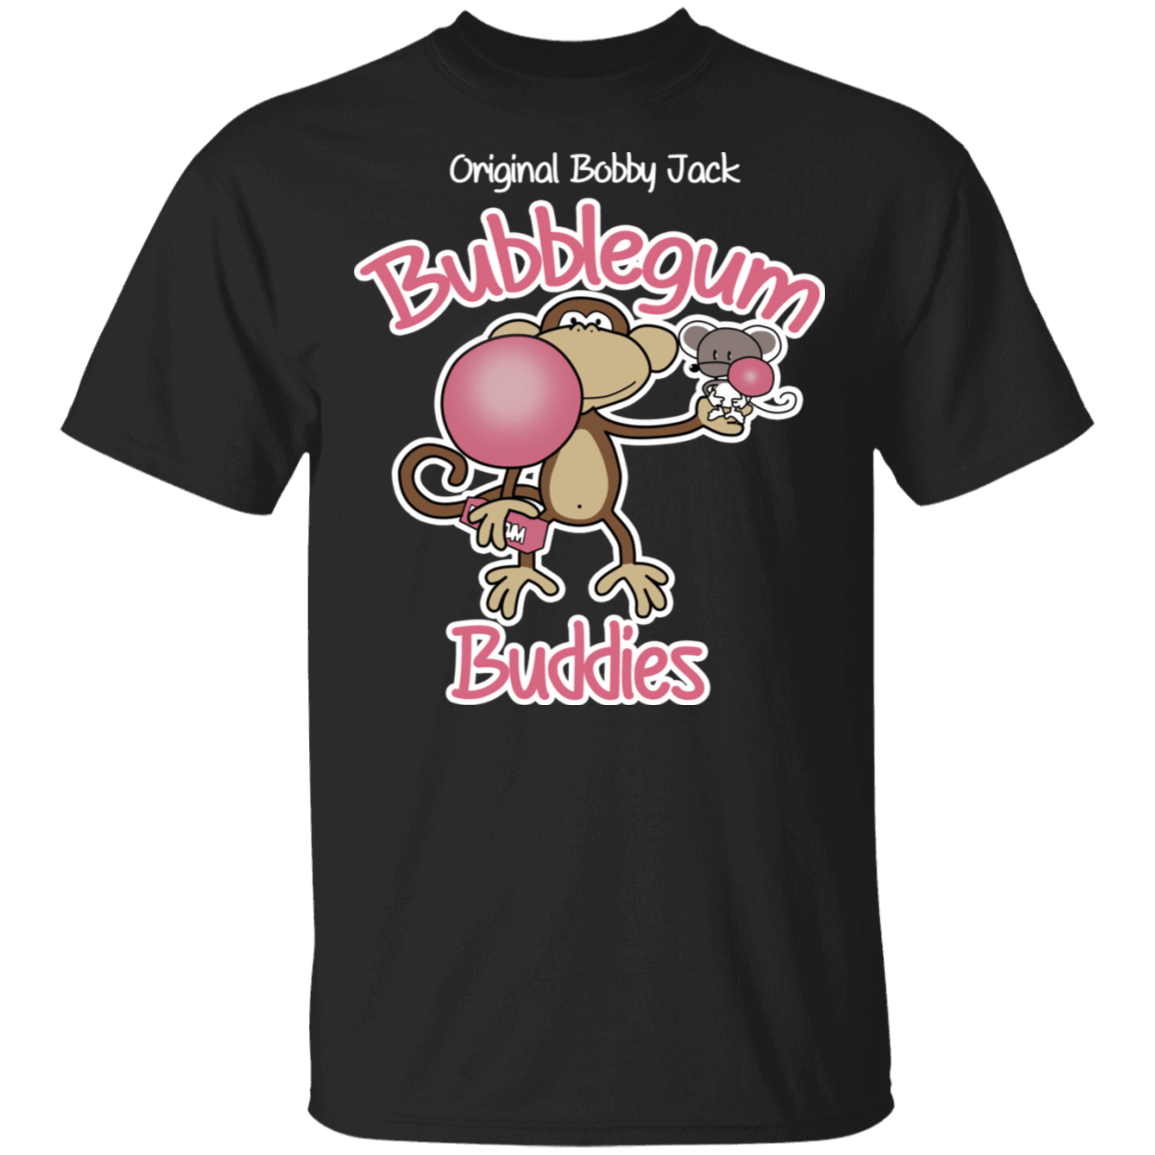 Original Bobby Jack Bubblegum Buddies Monkey T-Shirts, Hoodies, Tank